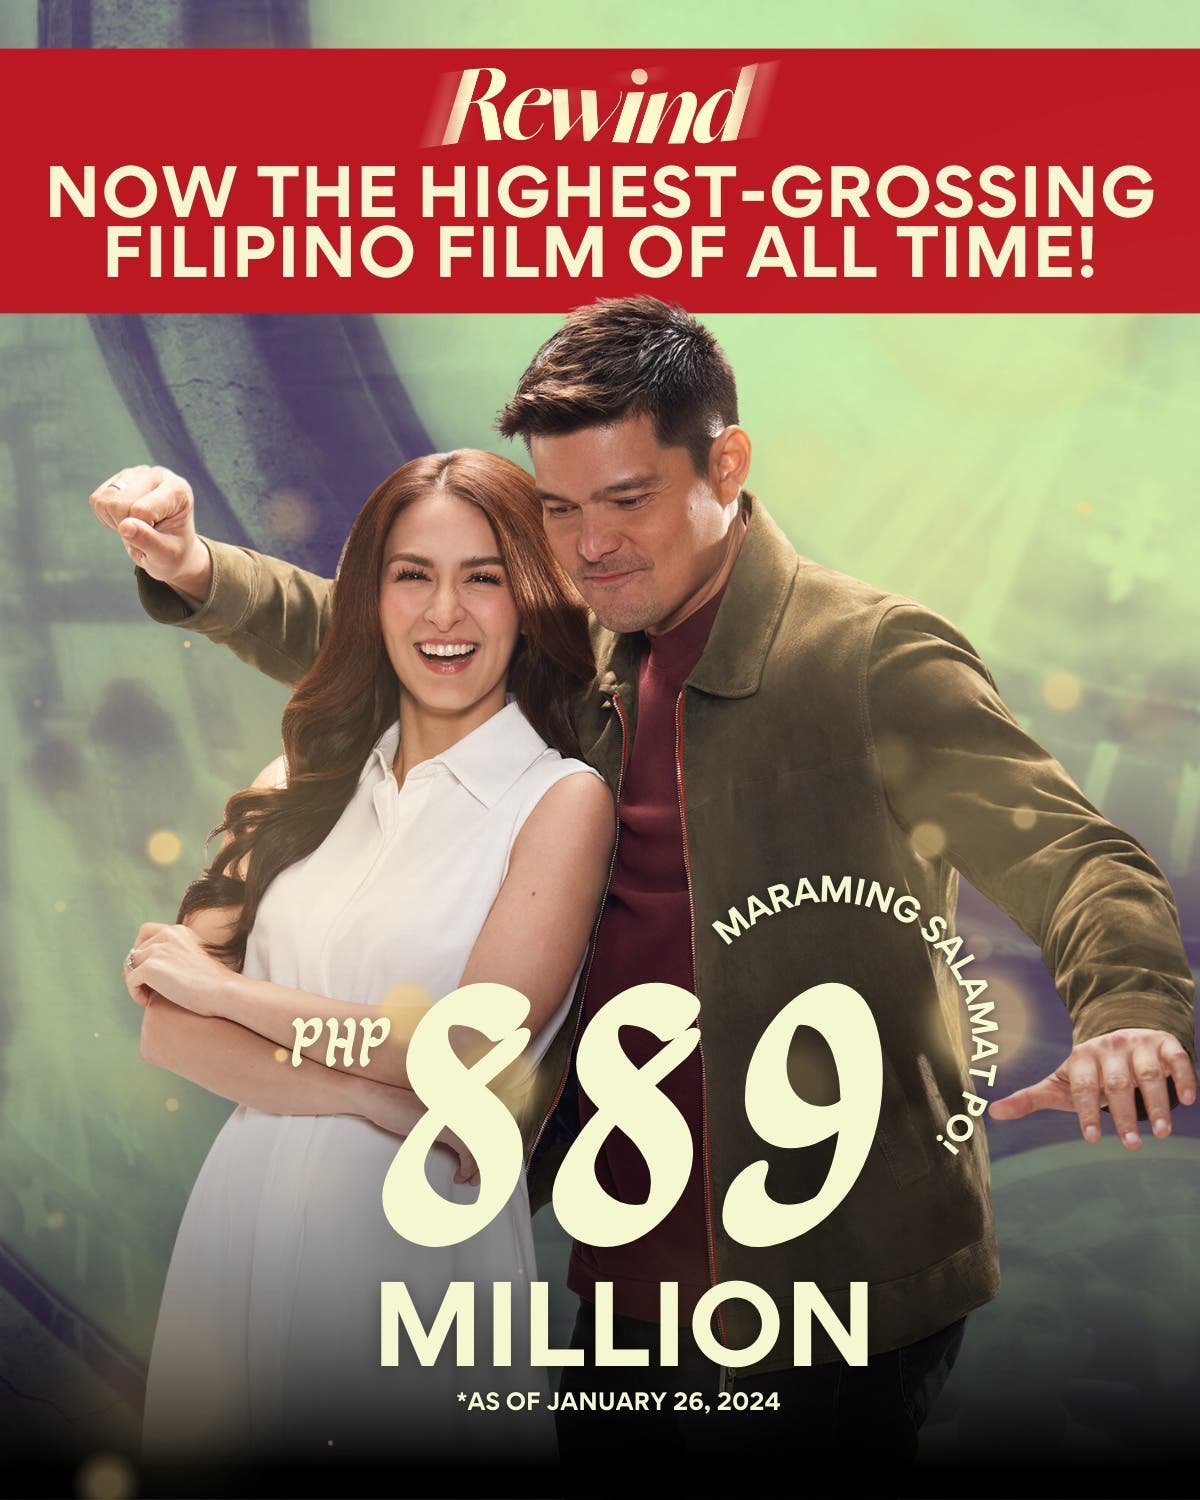 ‘Rewind’ Now the Highest-Grossing Filipino Film Worldwide